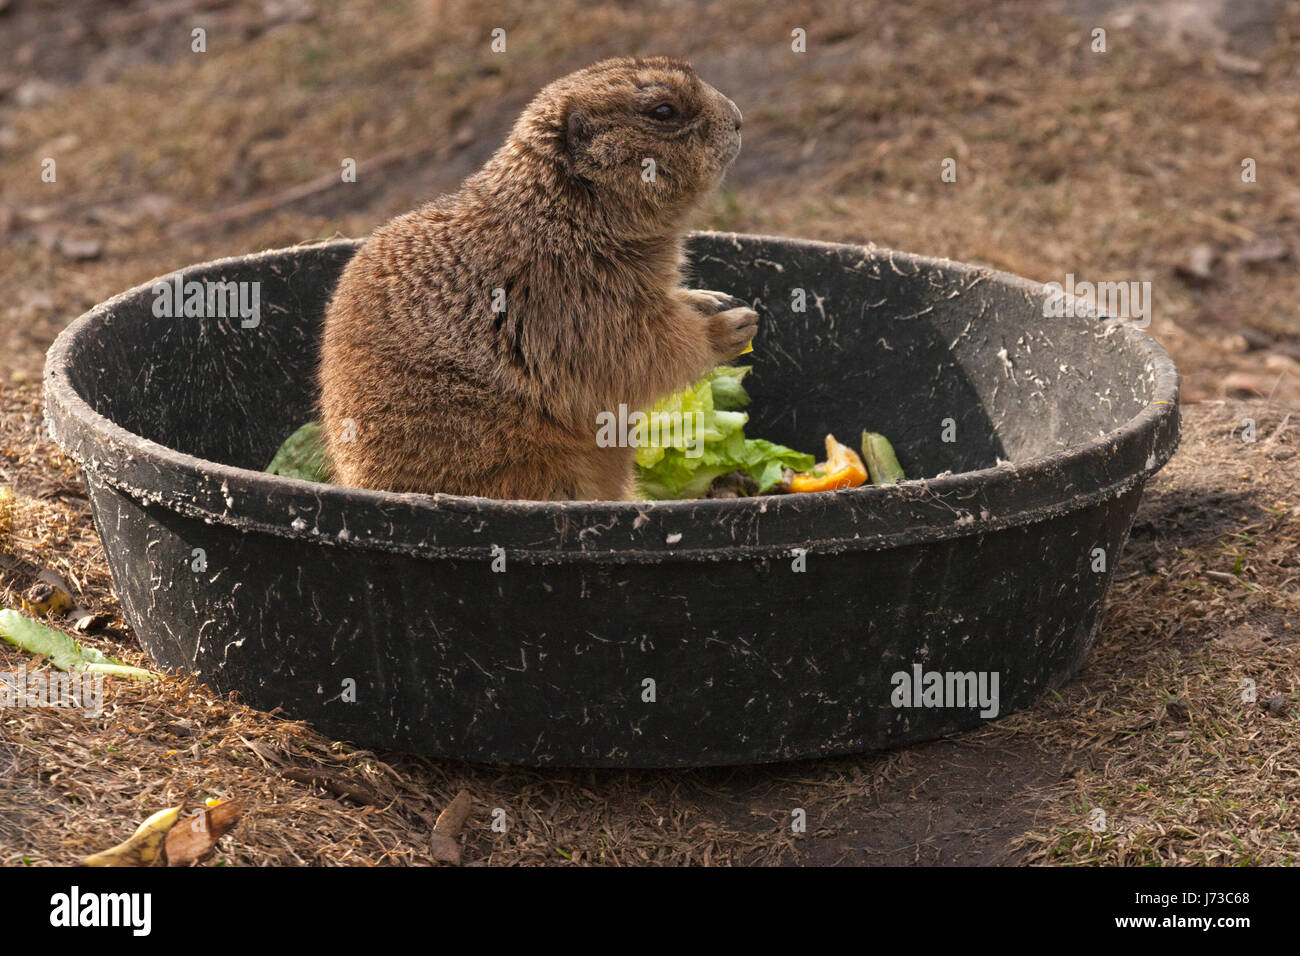 Black-Tailed Prairie Dog (Cynomys ludovicianus) in piedi in gomma vasca di alimentazione mangiare verdure fresche Foto Stock